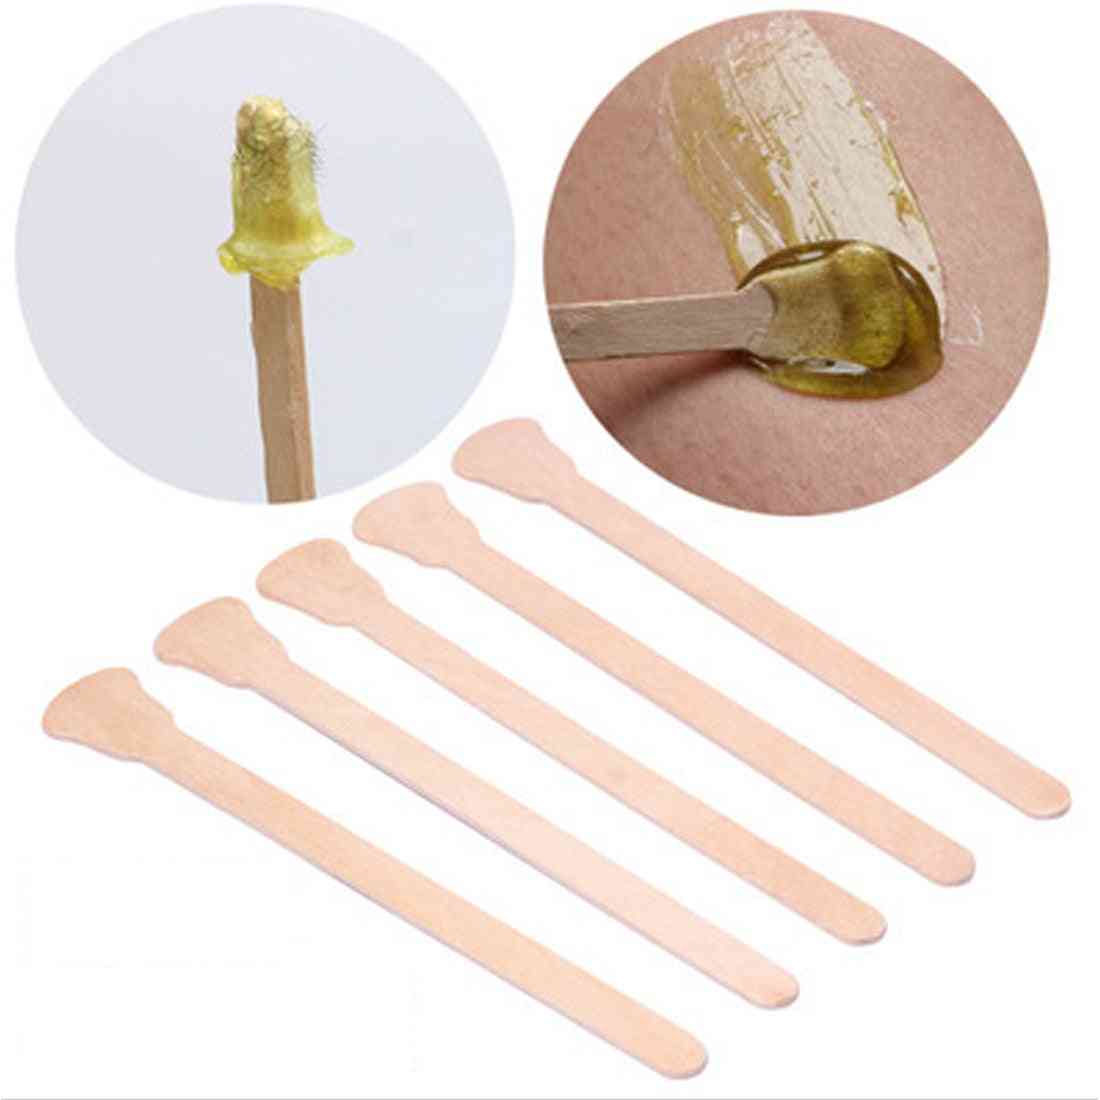 Waxing Wooden Disposable Bamboo Sticks Spatula Tongue Depressor Kit